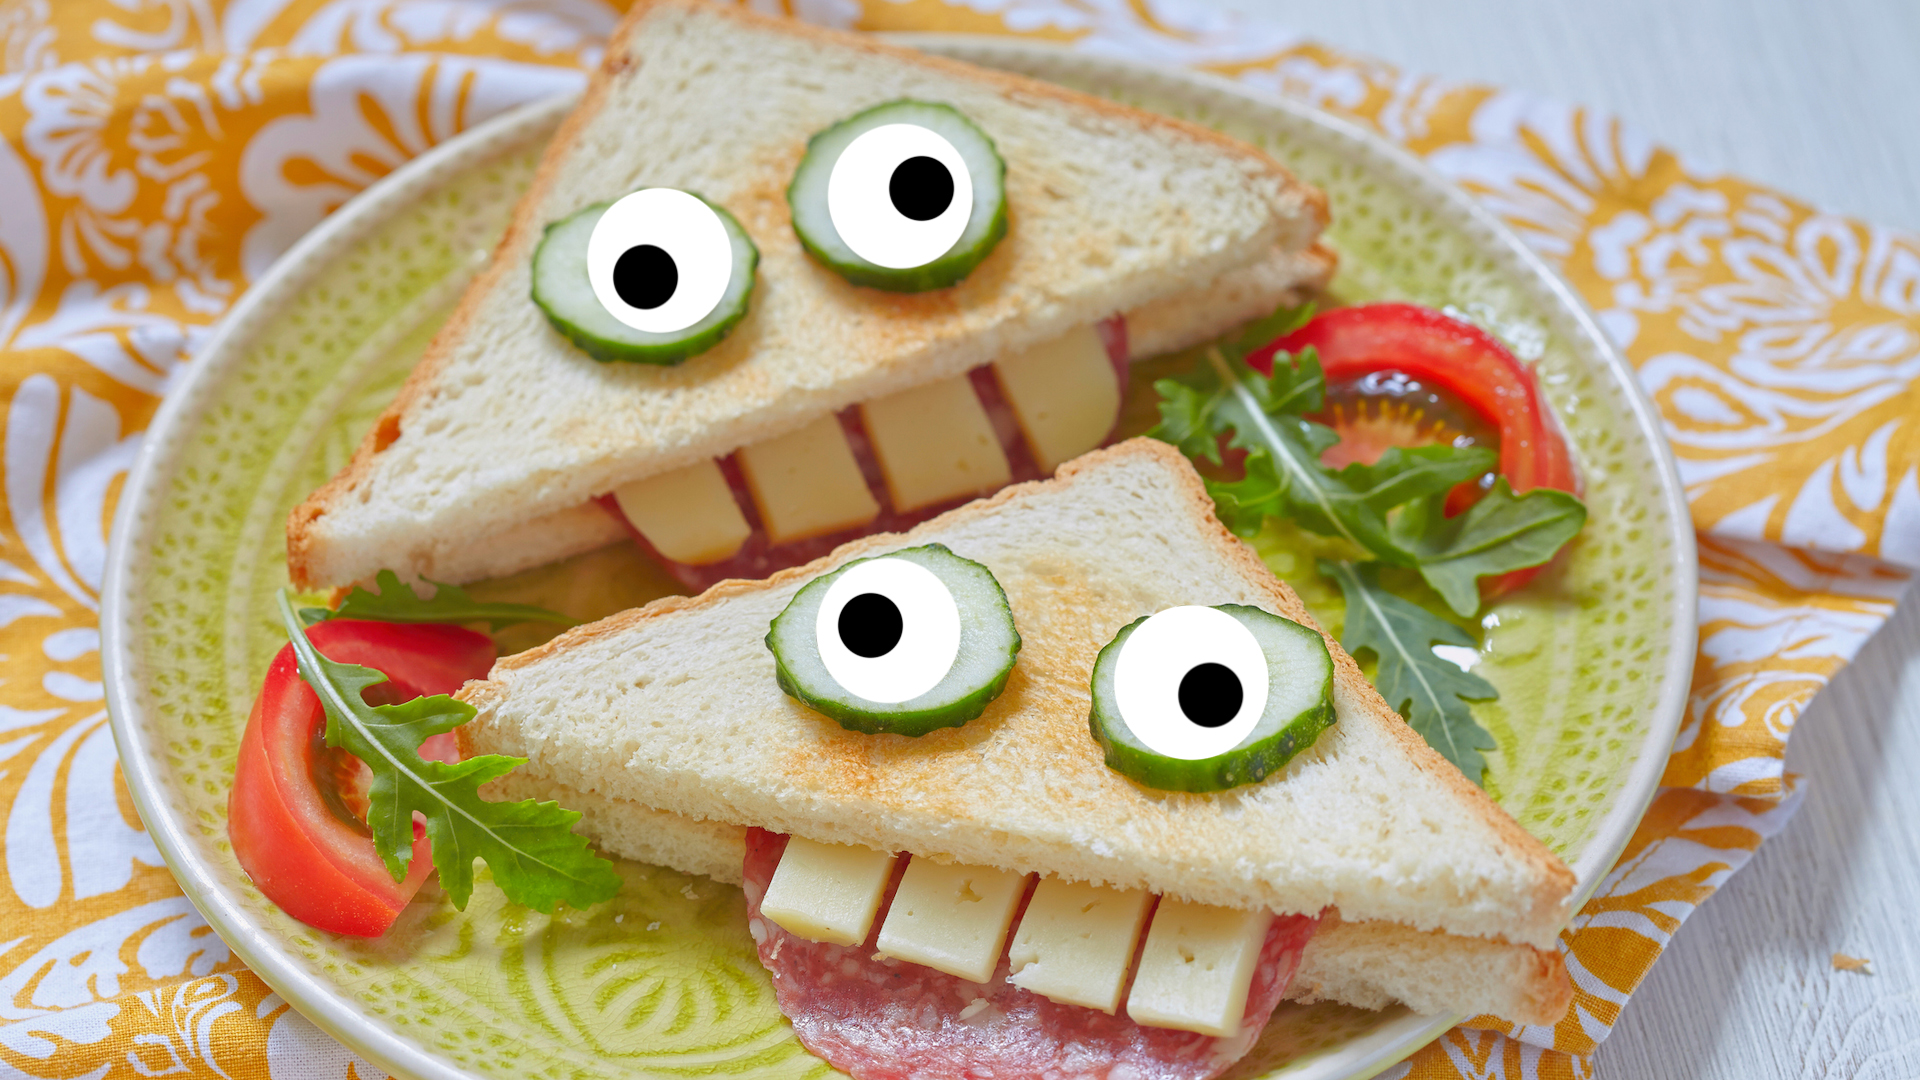 A funny looking sandwich